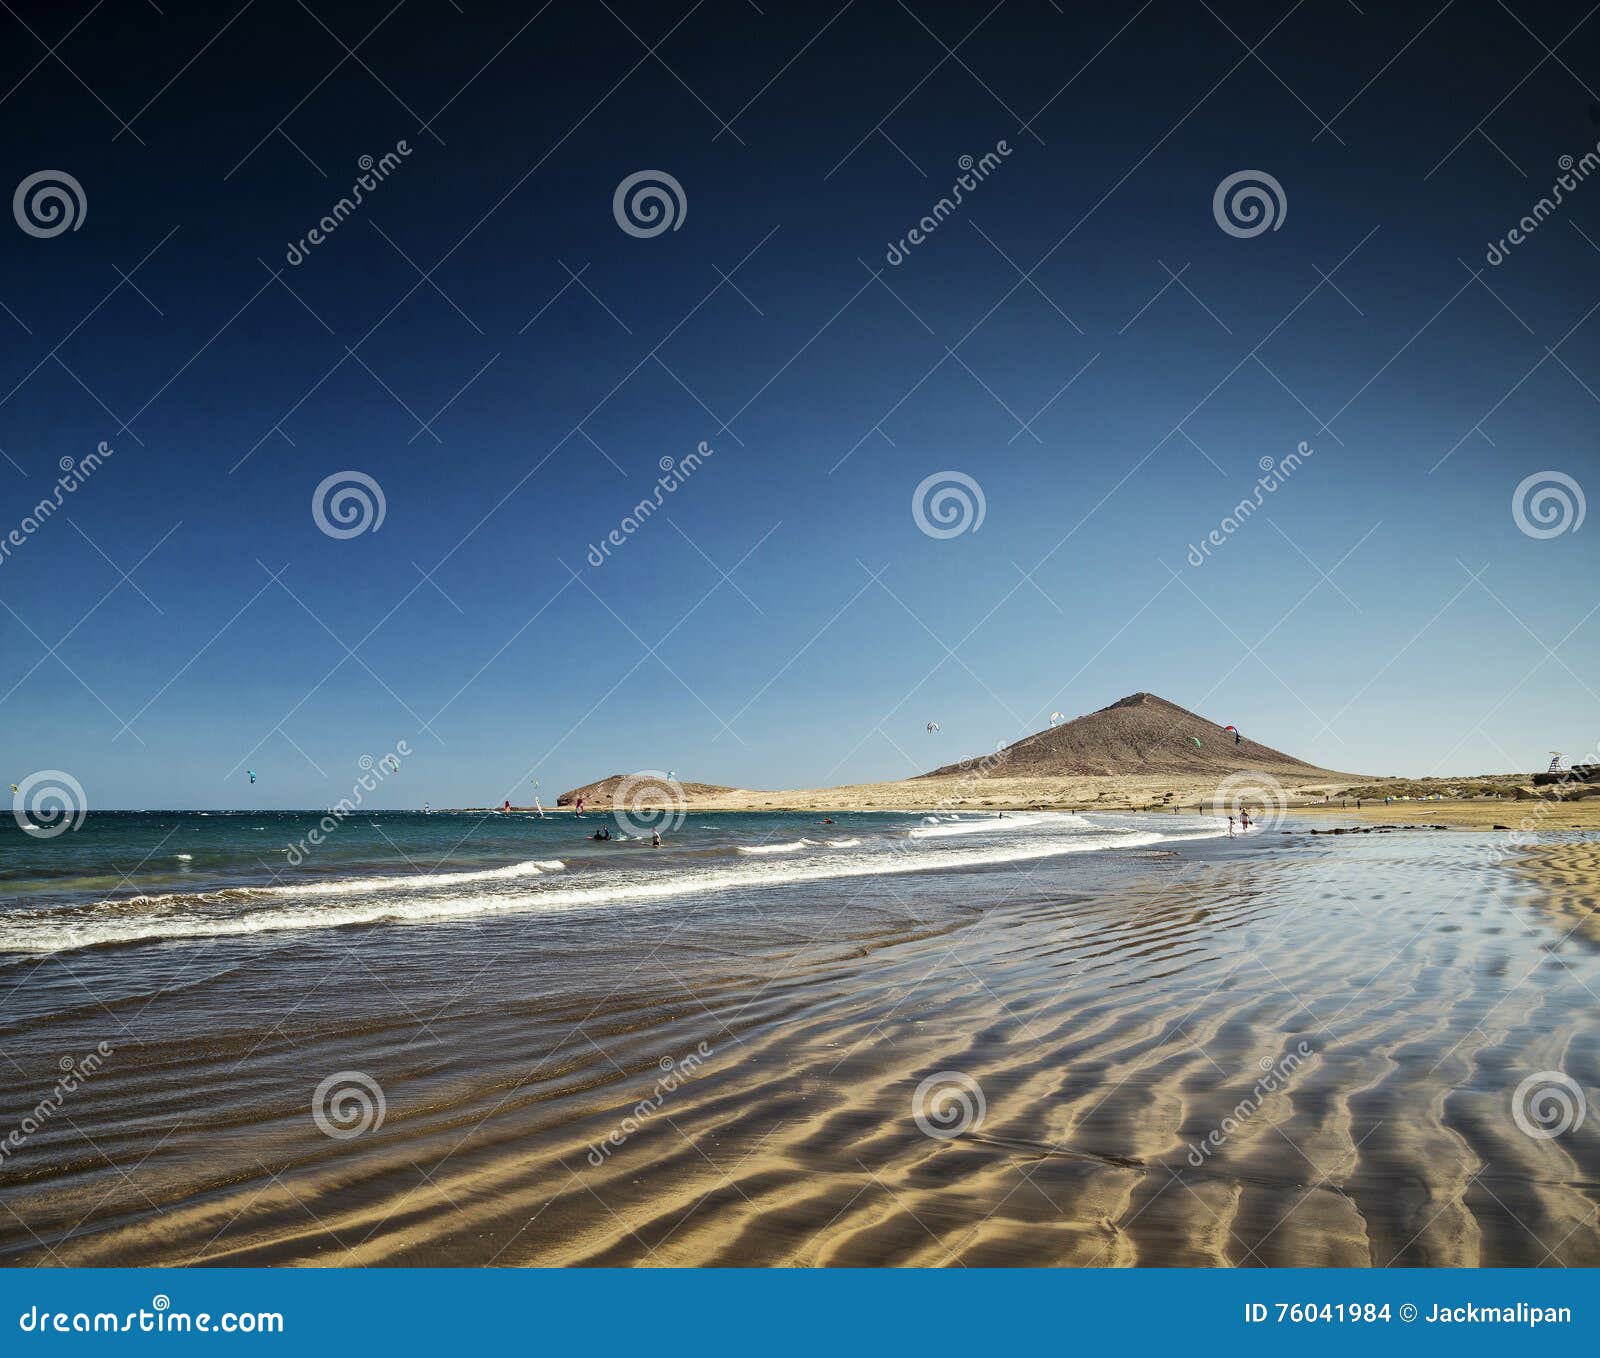 el medano beach and montana roja landscape in tenerife spain